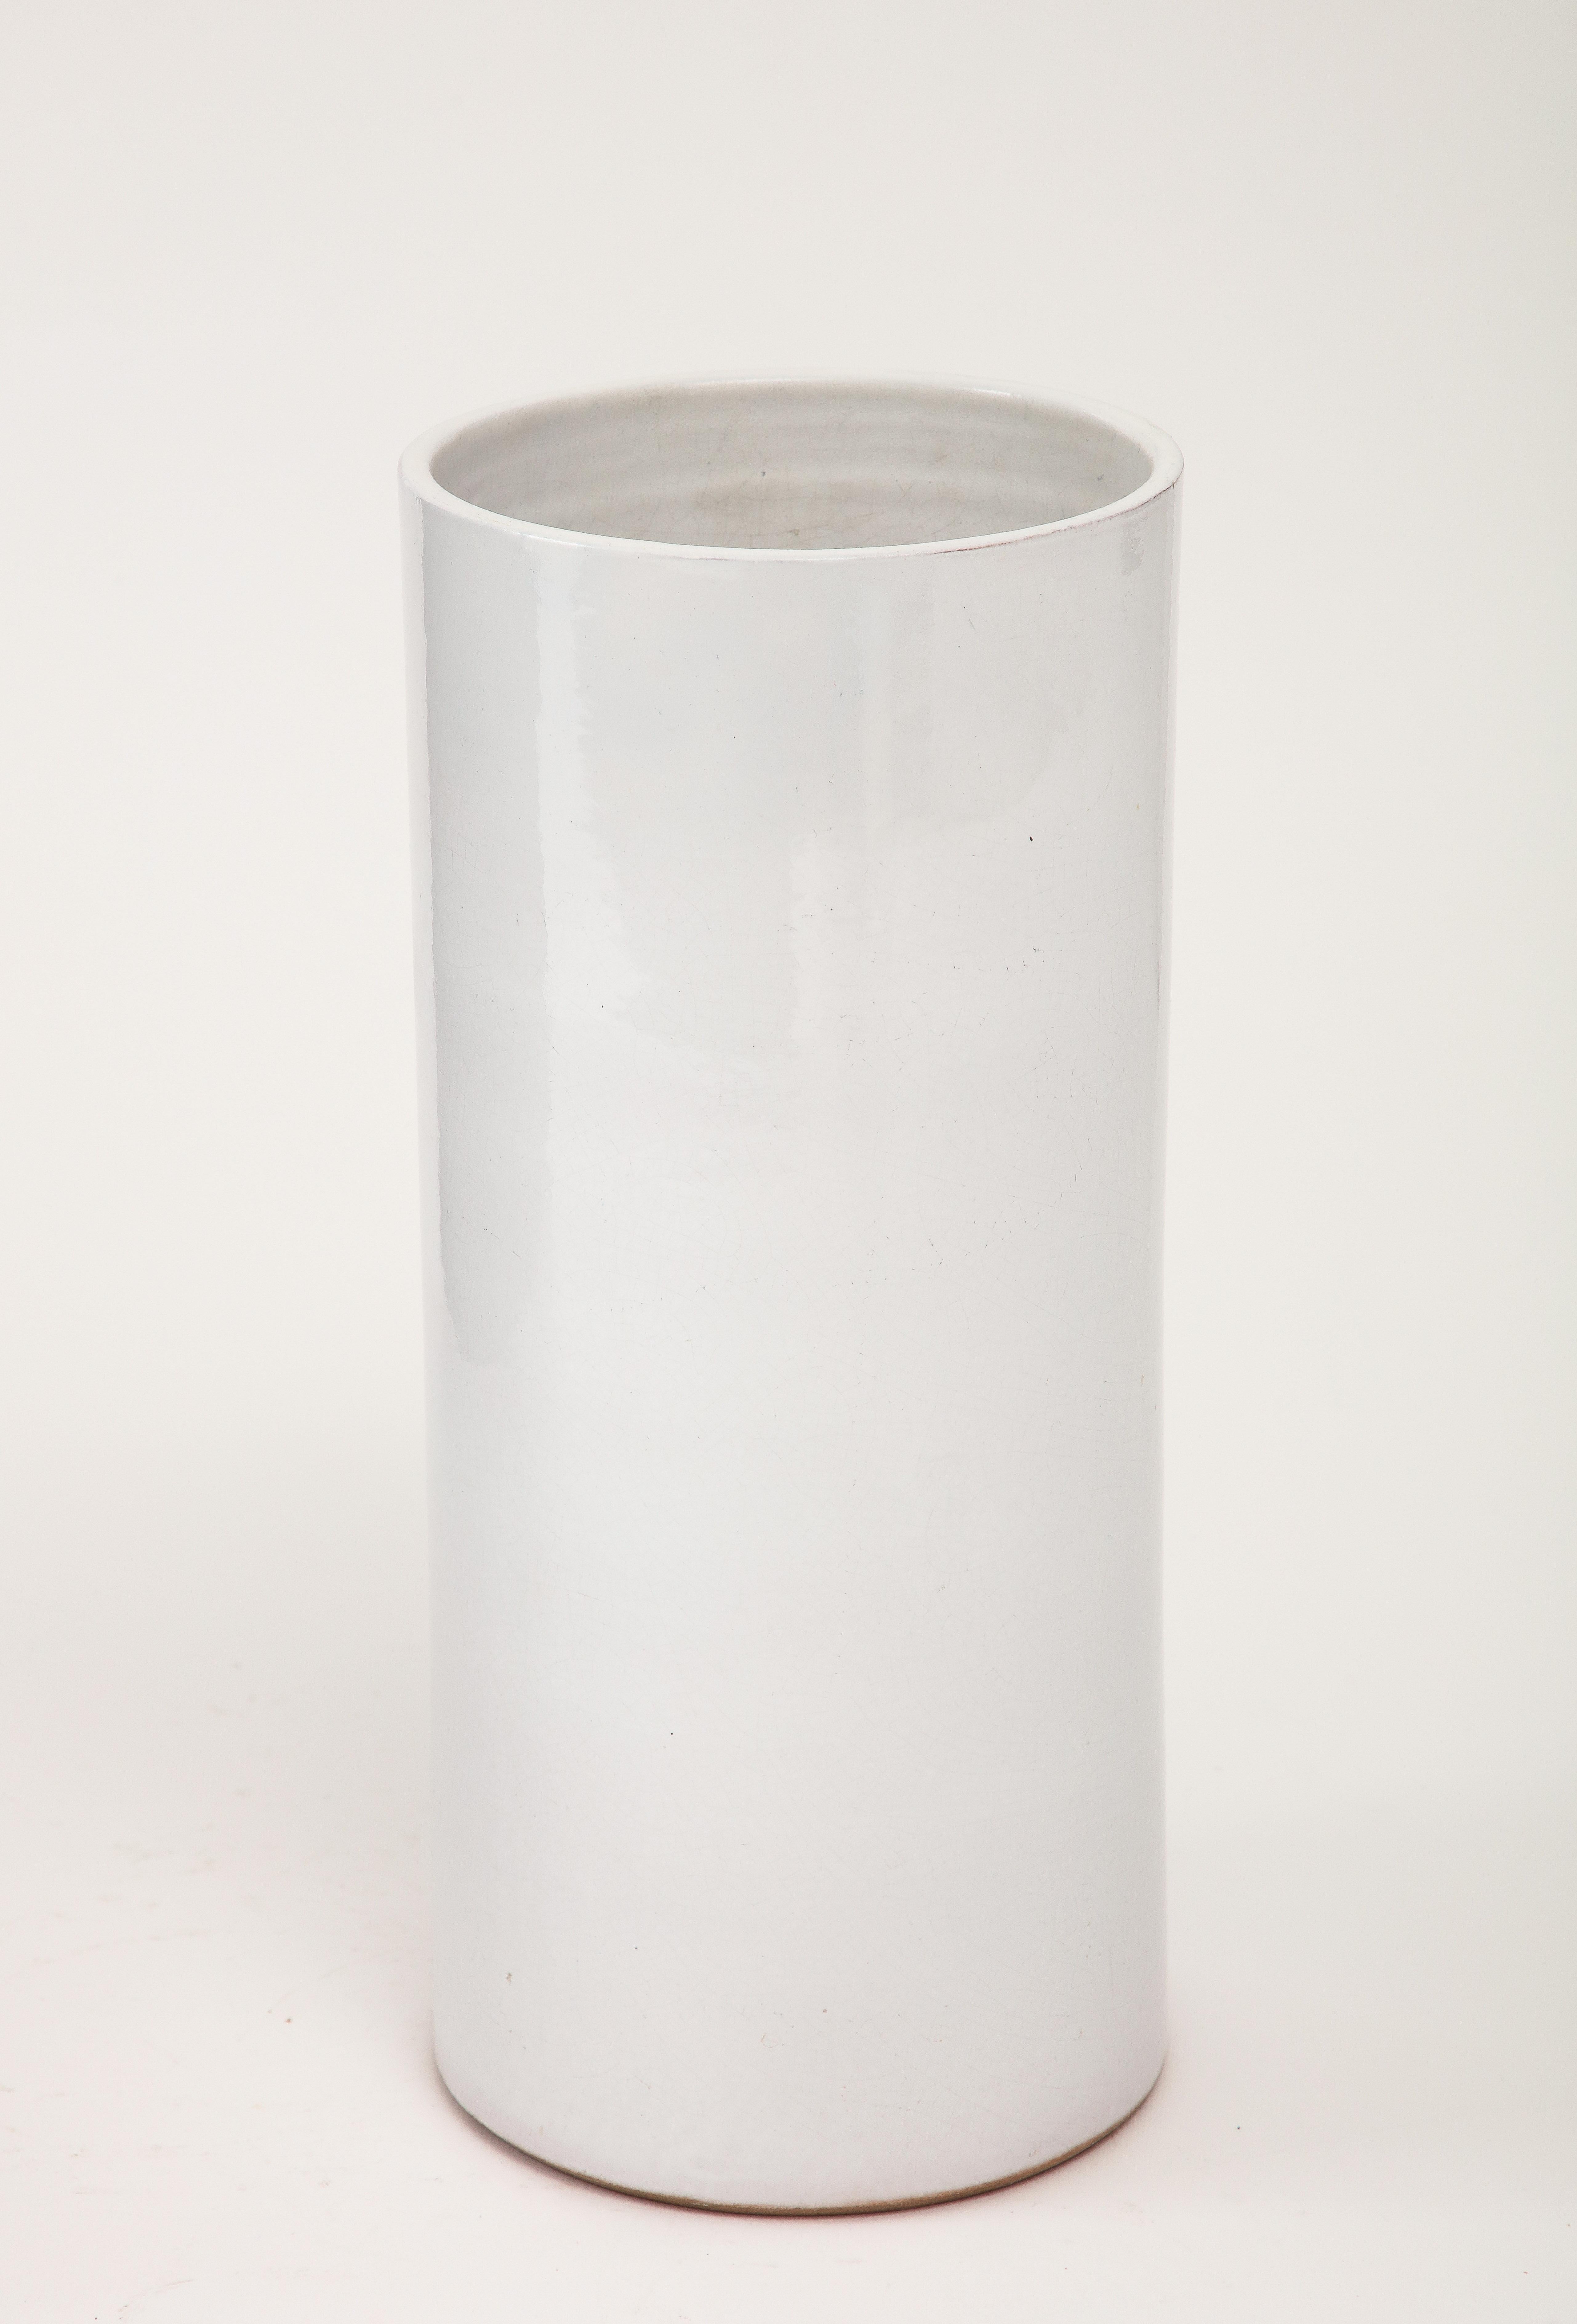 Glazed Grey White Crackle Glaze Cylindrical Vase, France, c. 1950's For Sale